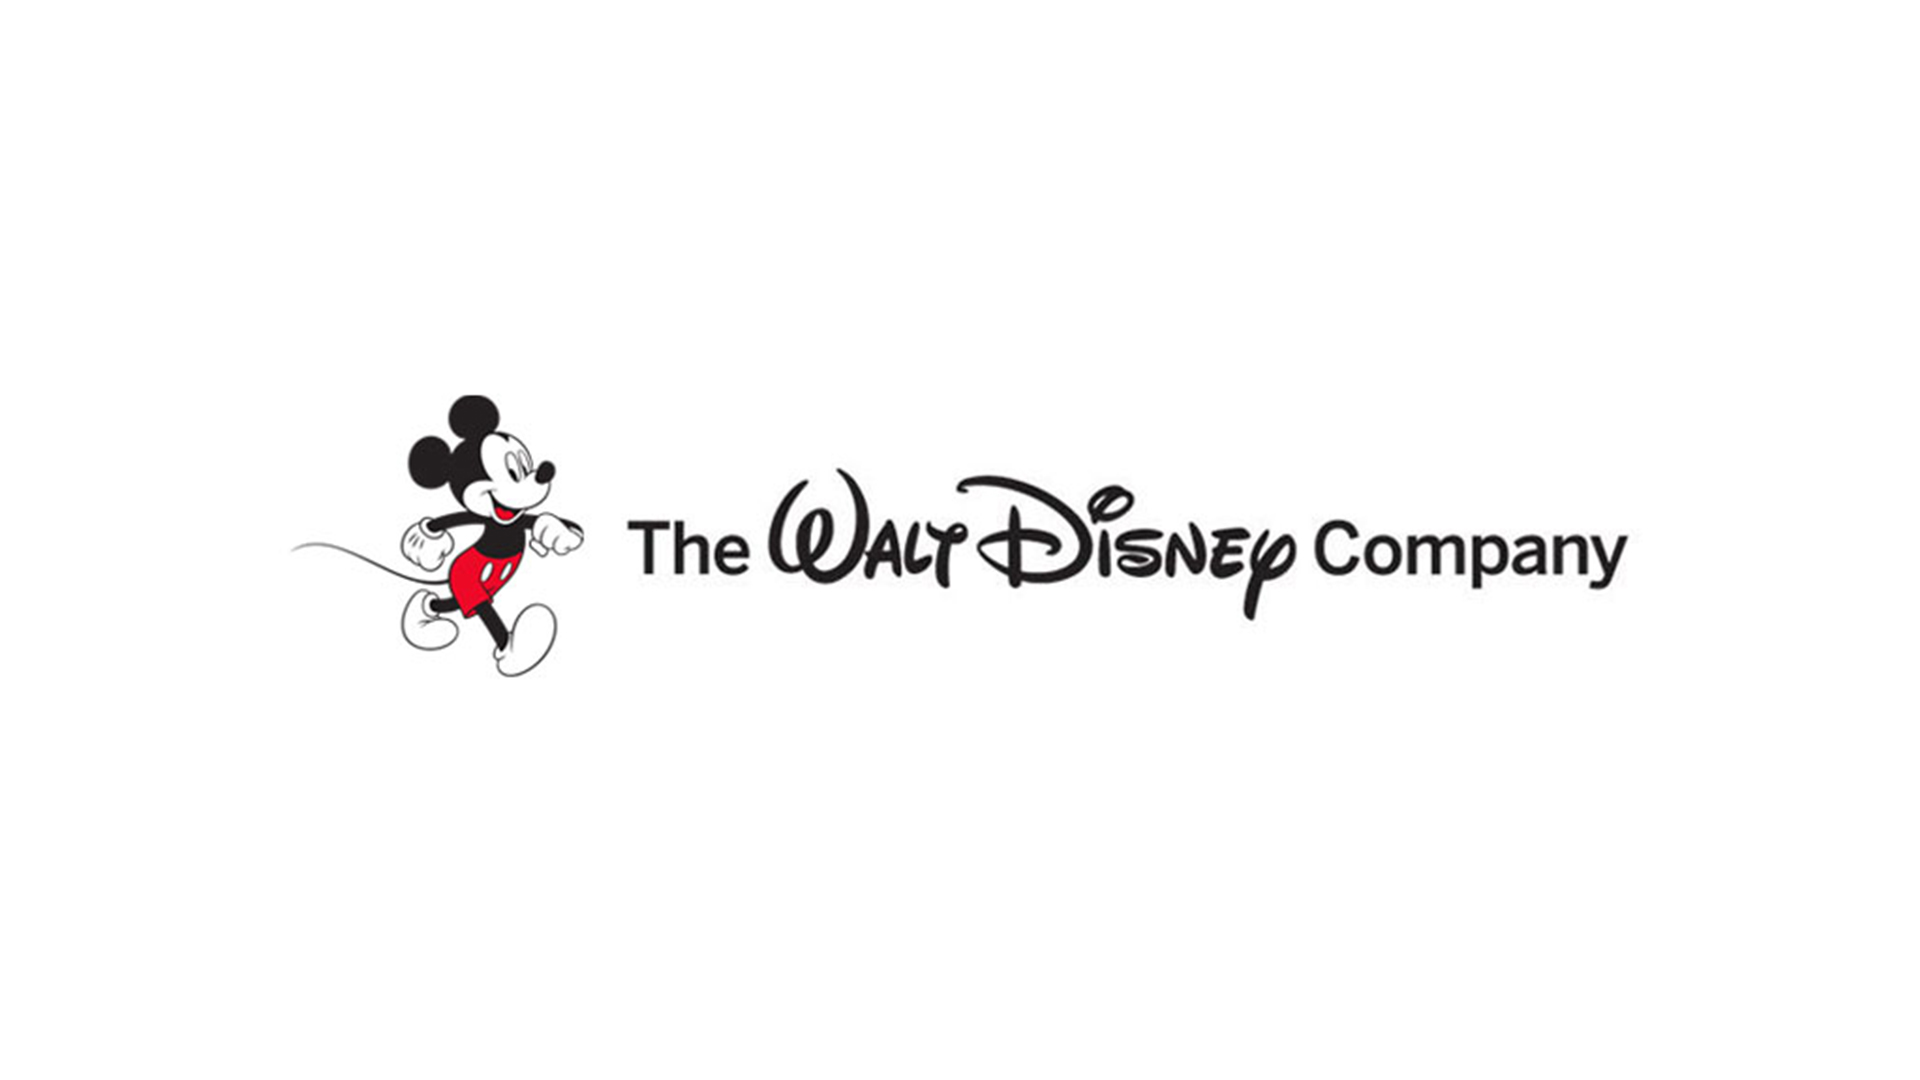 The Walt Disney Company Declares Cash Dividend of $0.30 Per Share